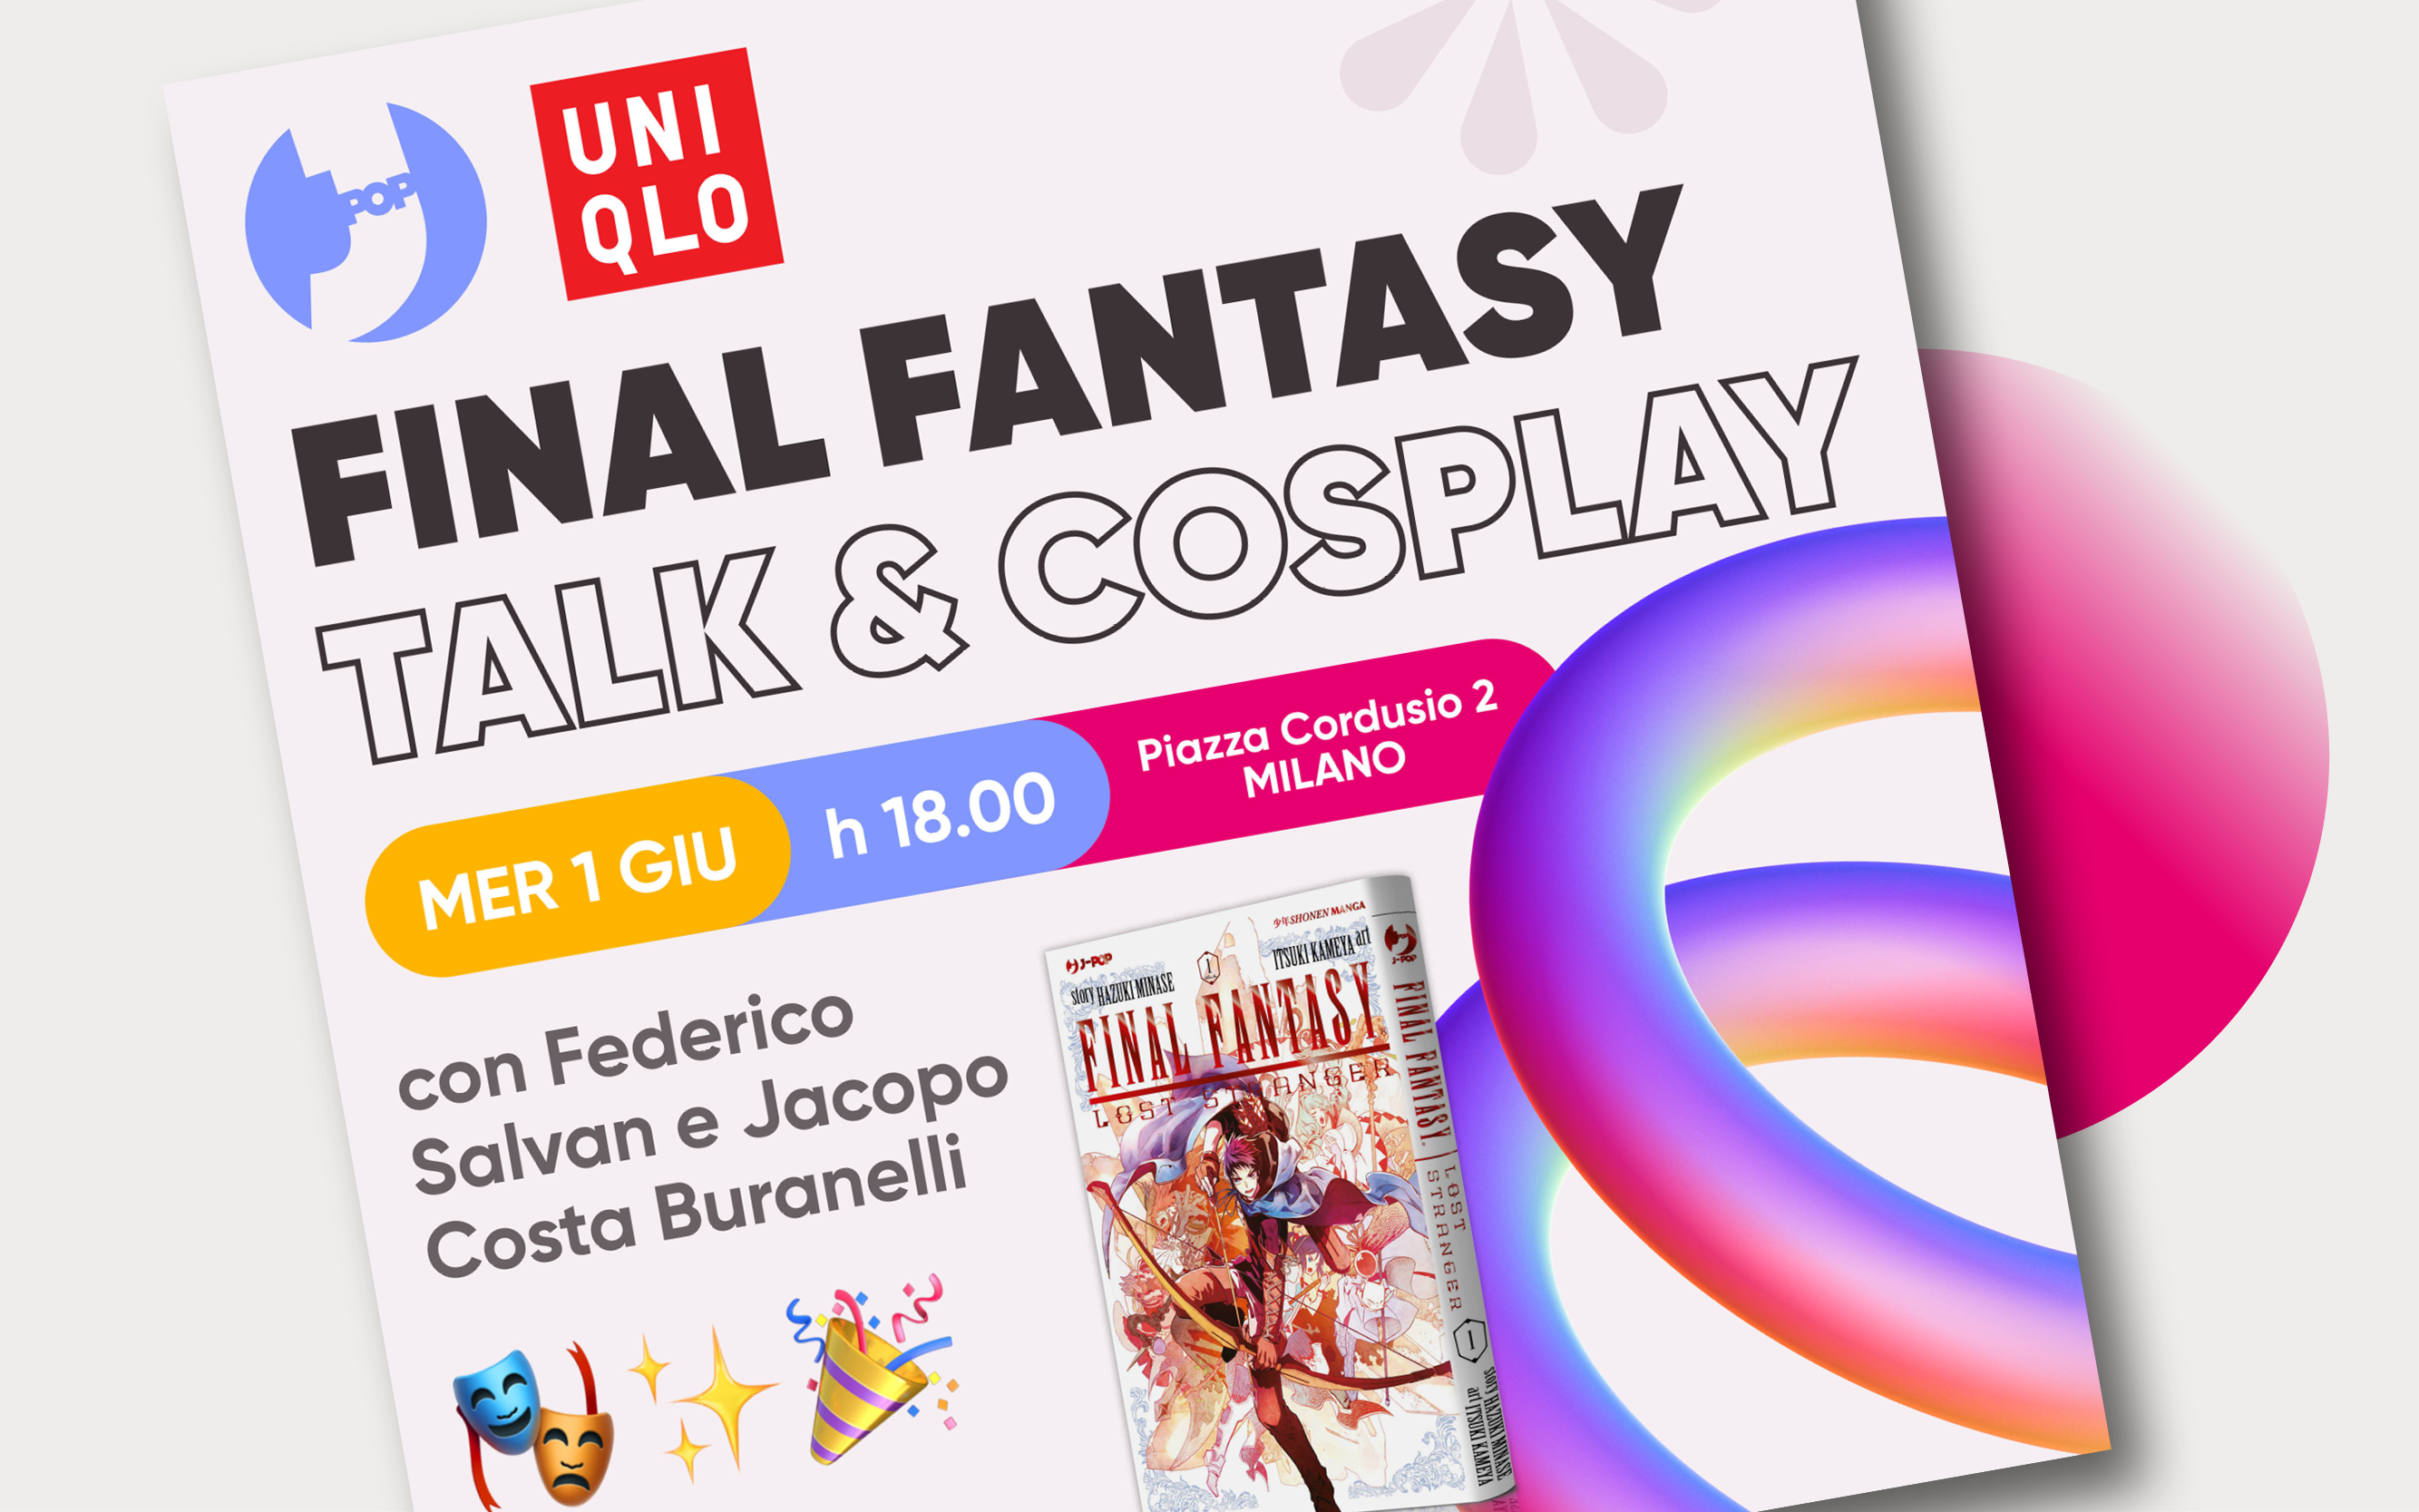 J-POP Manga presenta  Final Fantasy Talk & Cosplay con UNIQLO